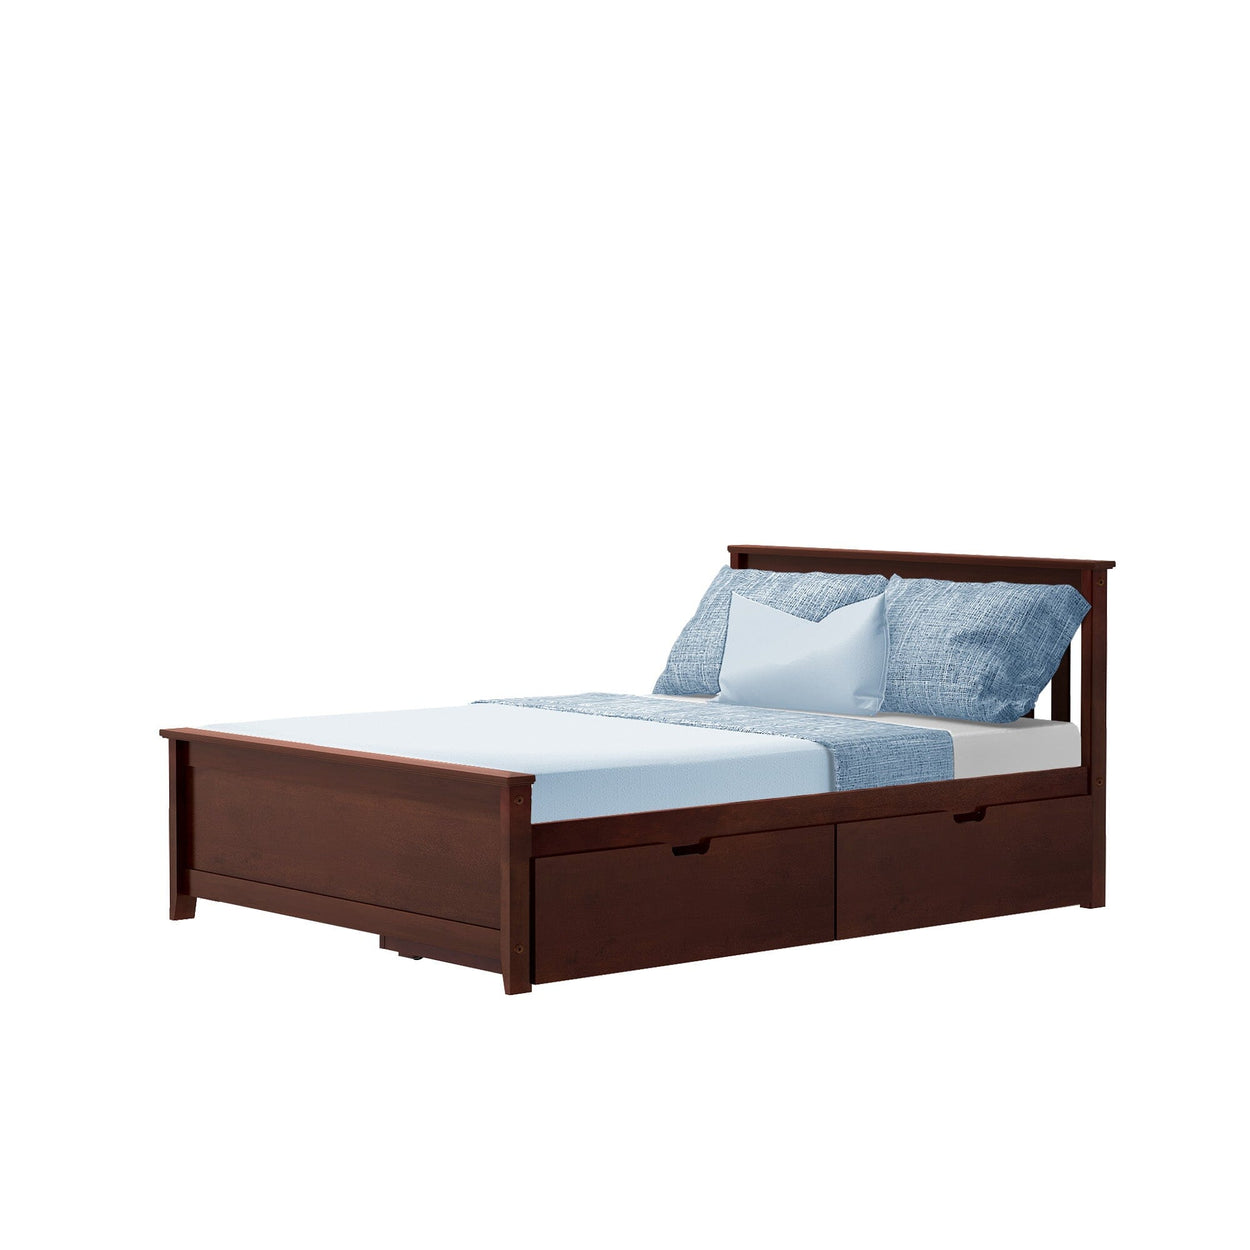 187211-005 : Kids Beds Full-Size Platform Bed with Under Bed Storage Drawers, Espresso